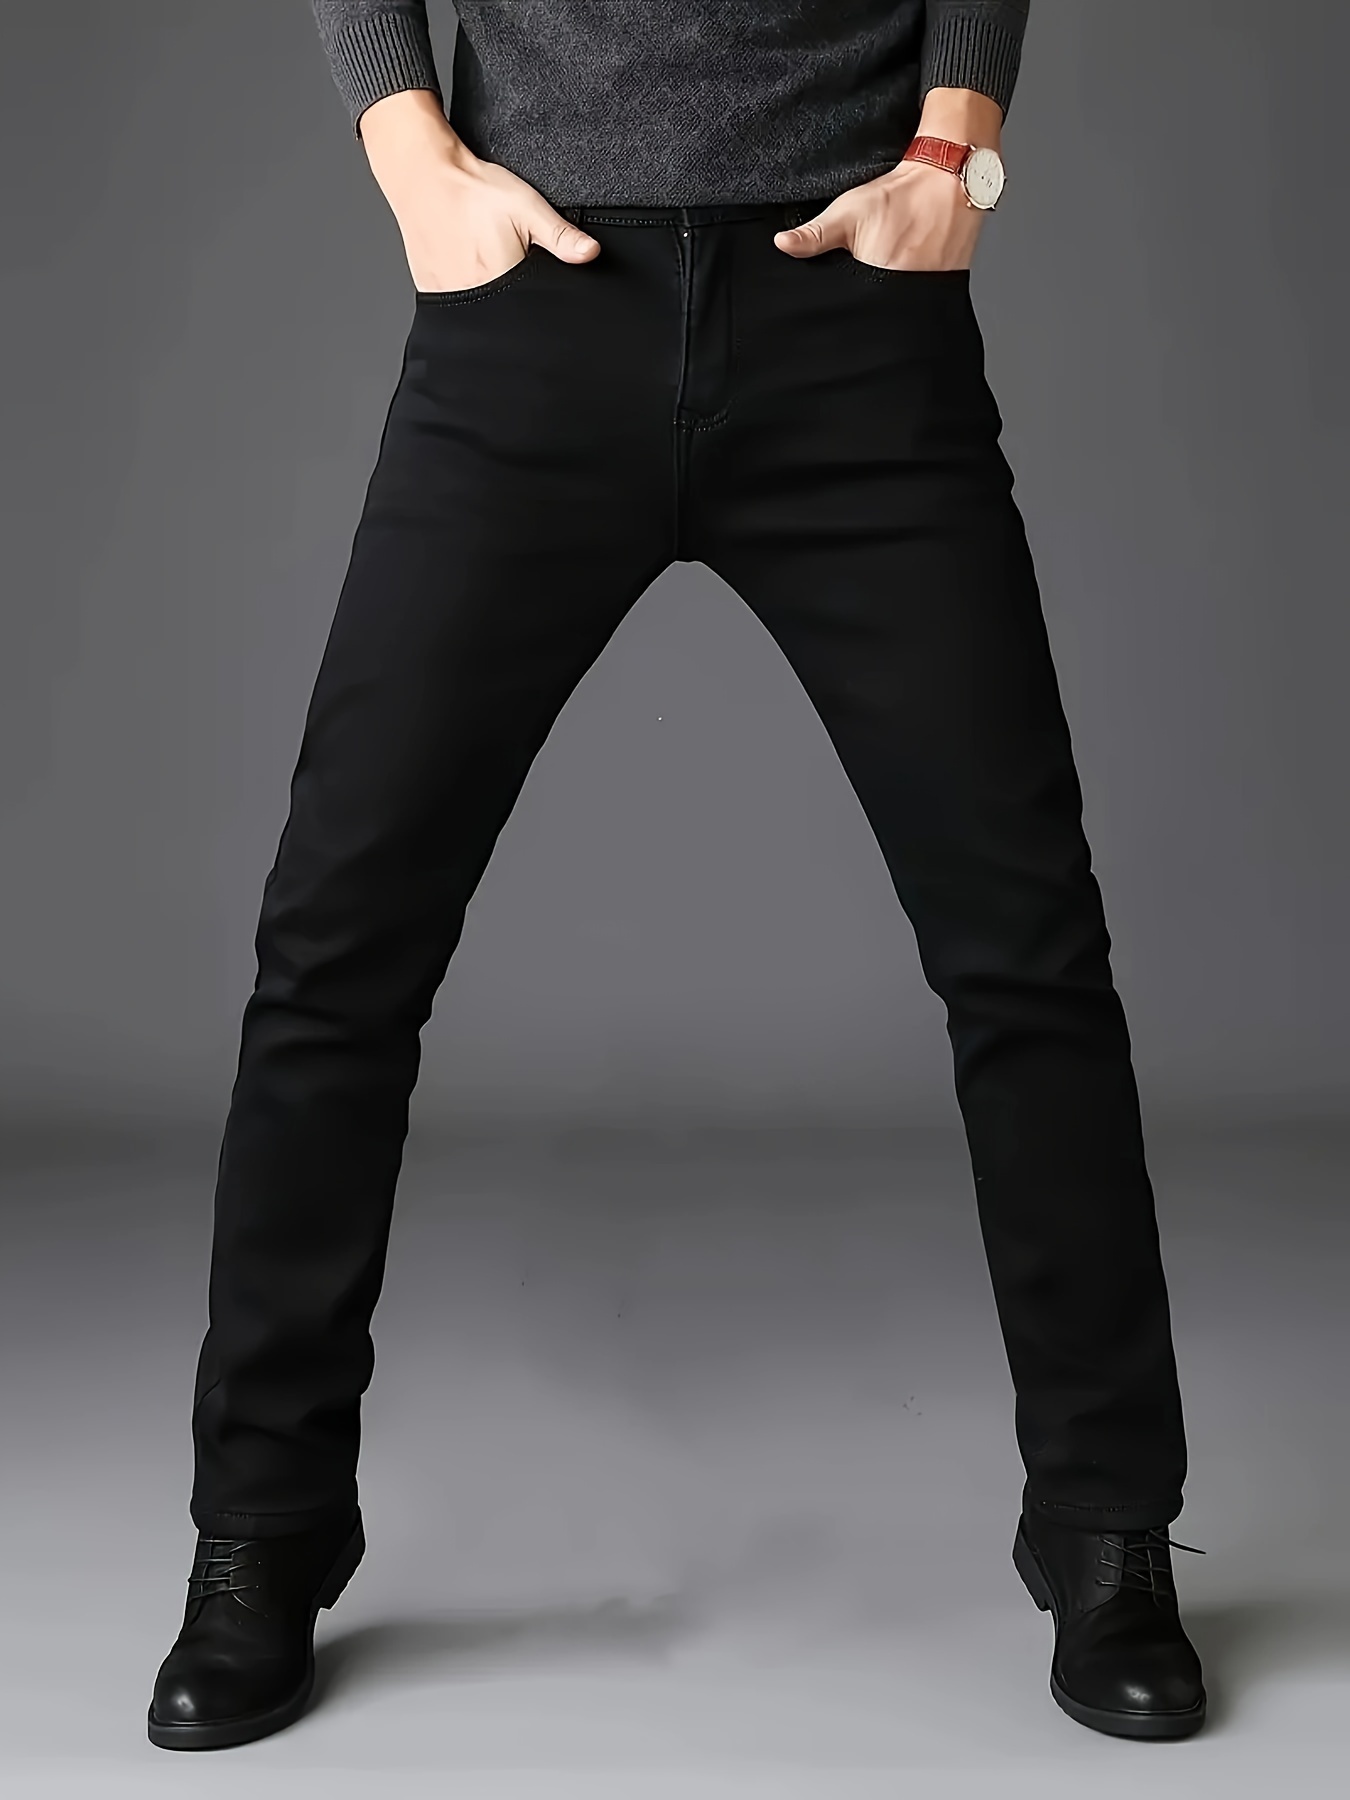 Slim Fit Black Formal Pants For Men at Rs 800 in Jaipur | ID: 20351488373-seedfund.vn